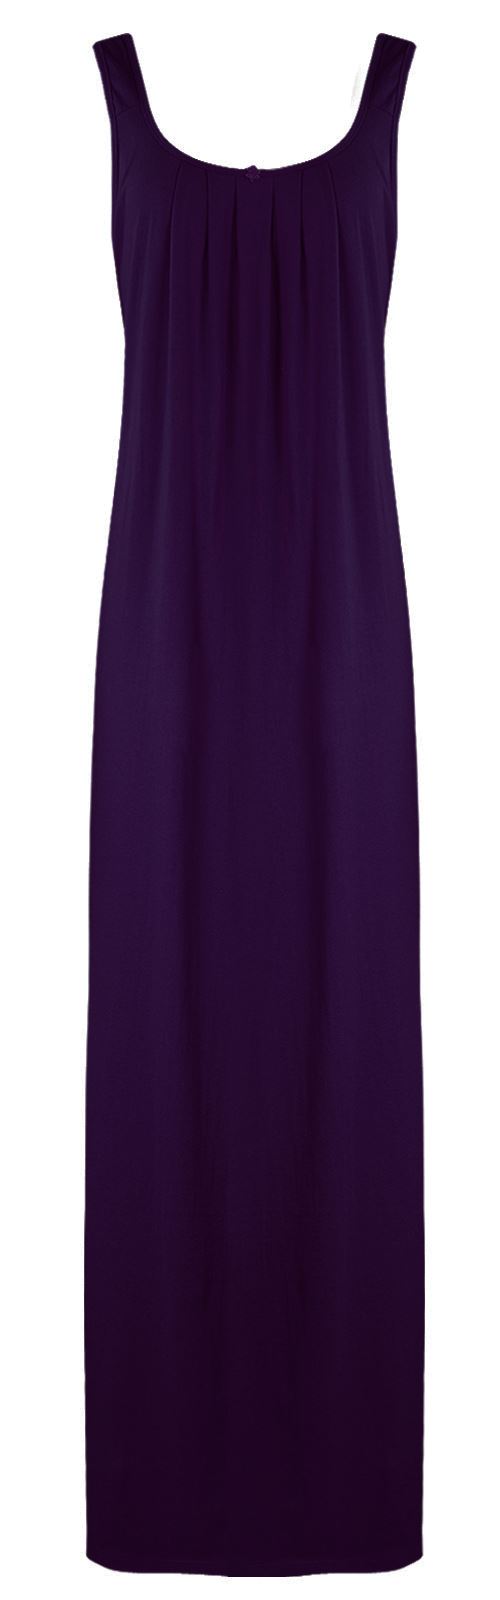 Dark Purple- Plain / One Size Cotton Nighty Slip Heart Print / Plain Night Gown Free Size The Orange Tags